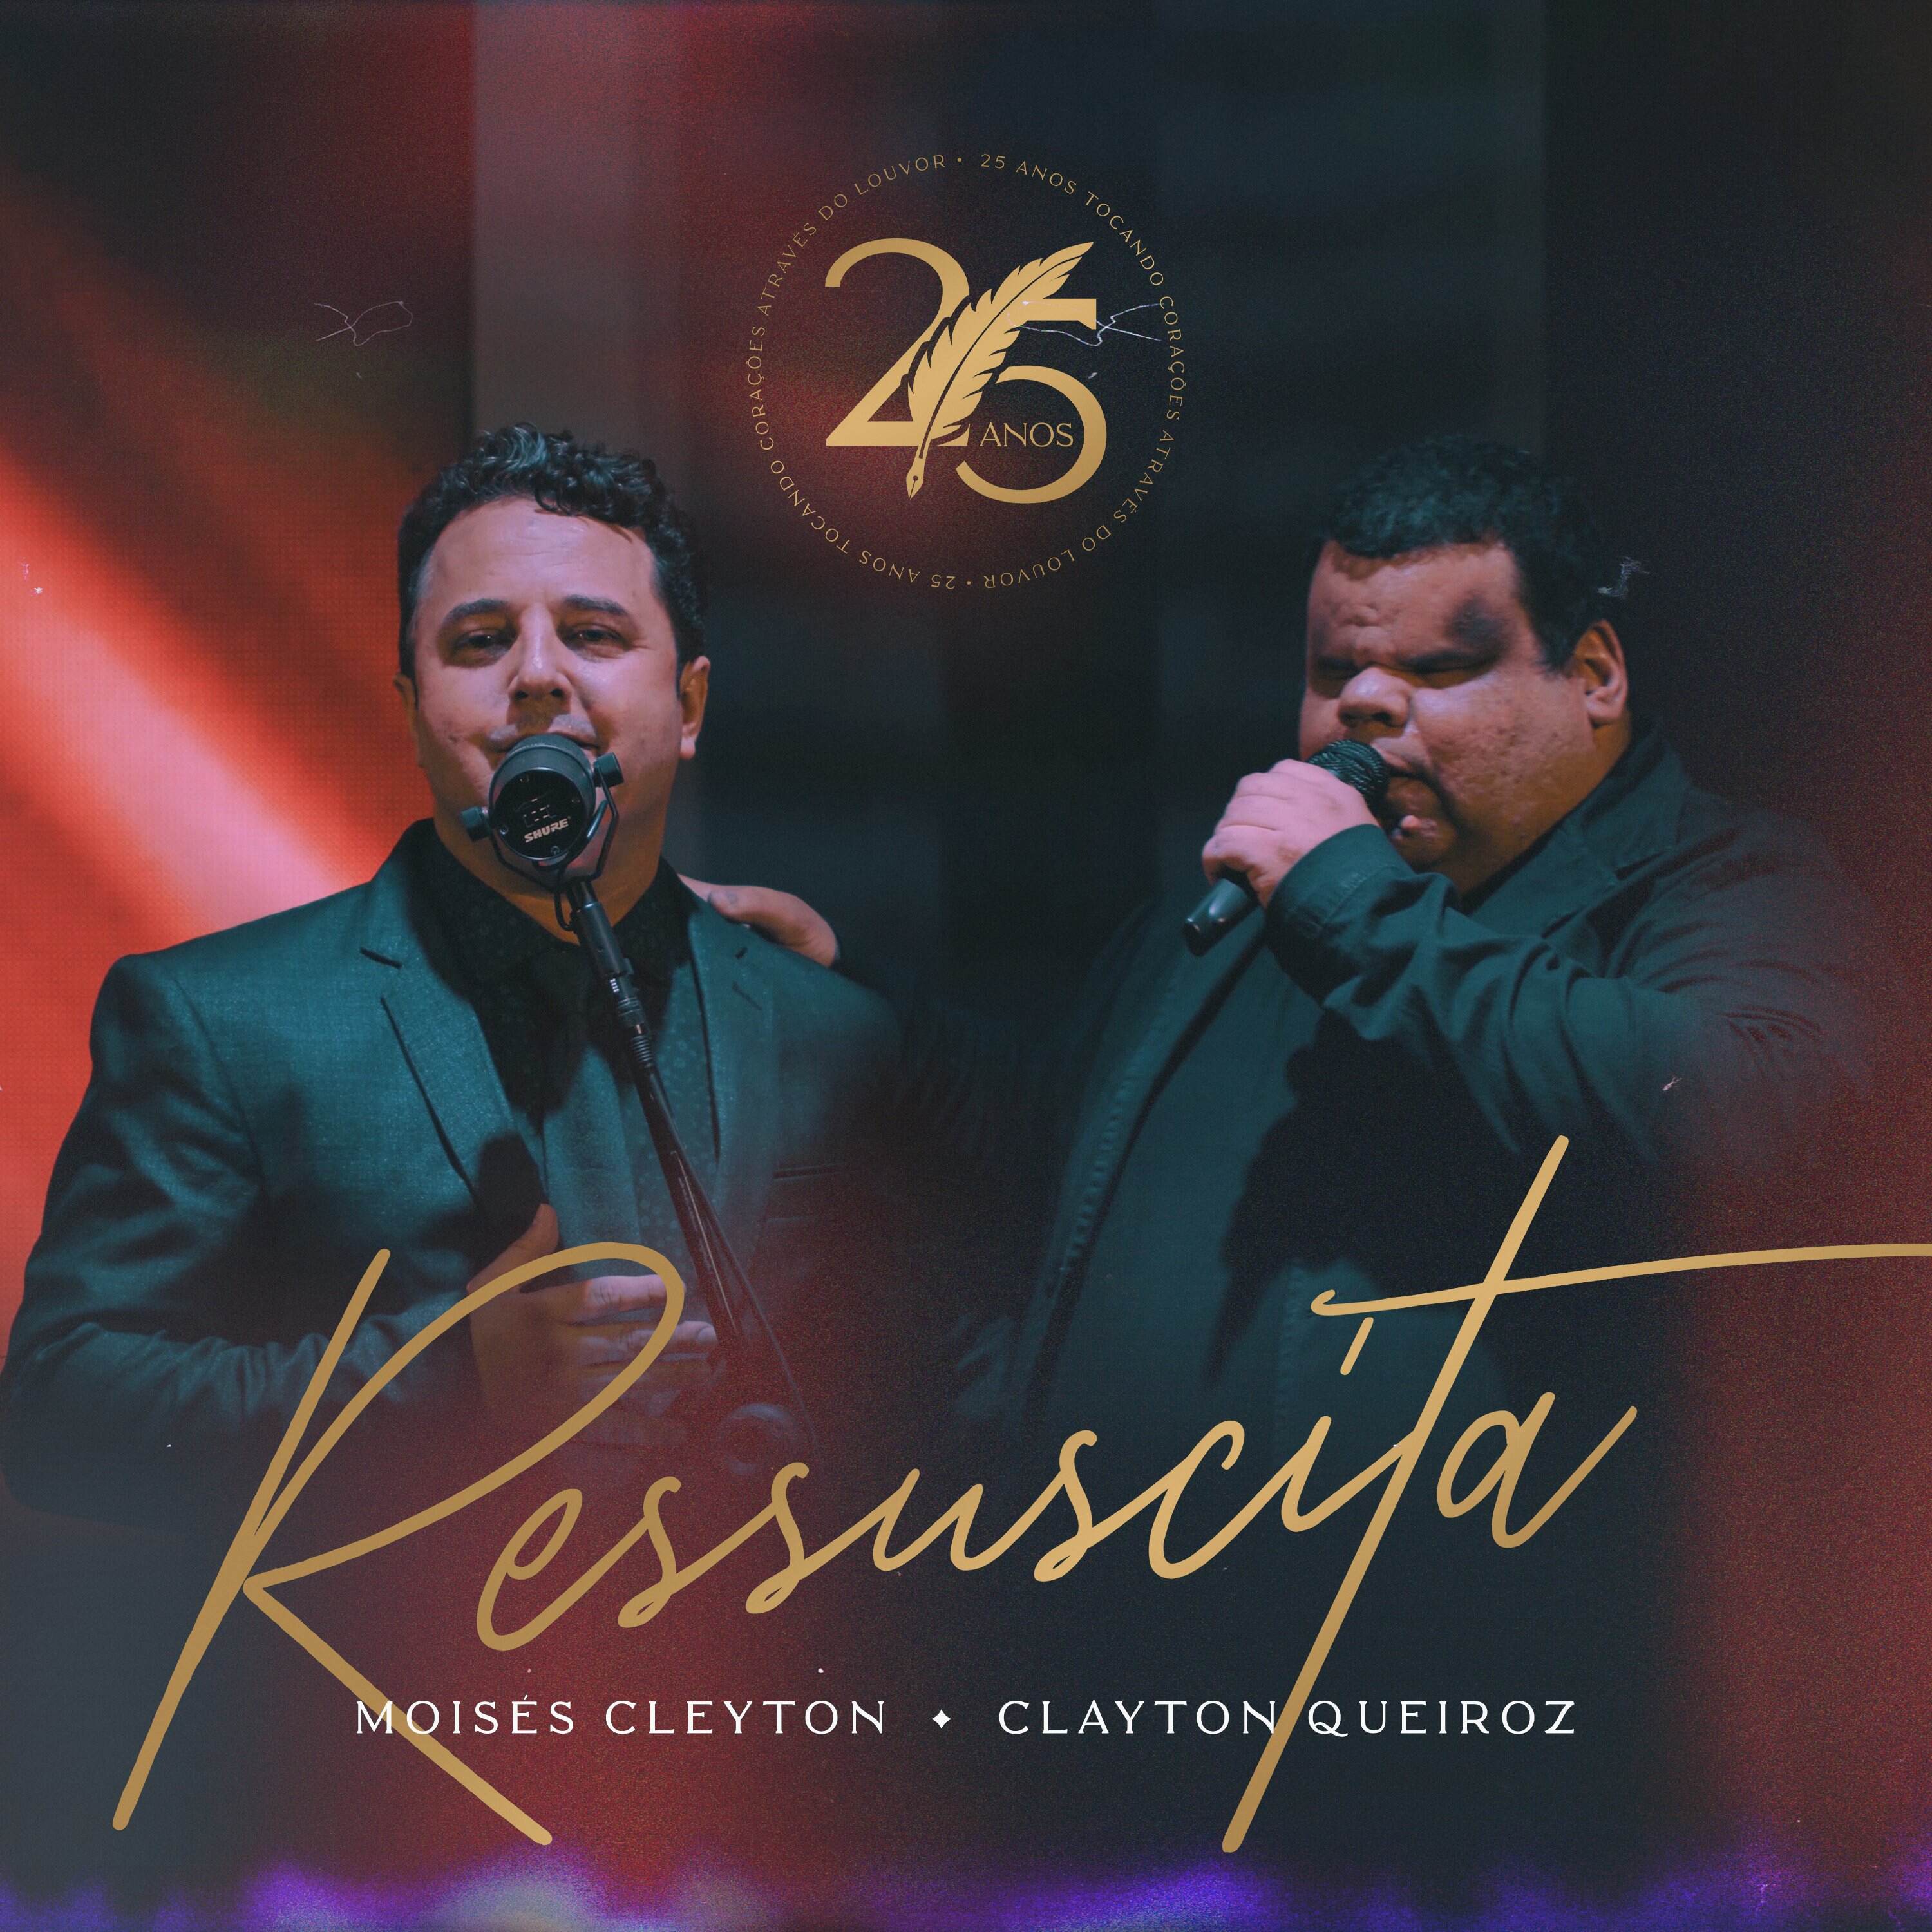 Moisés Cleyton & Clayton Queiroz em “Ressuscita”, milagres ainda acontecem!